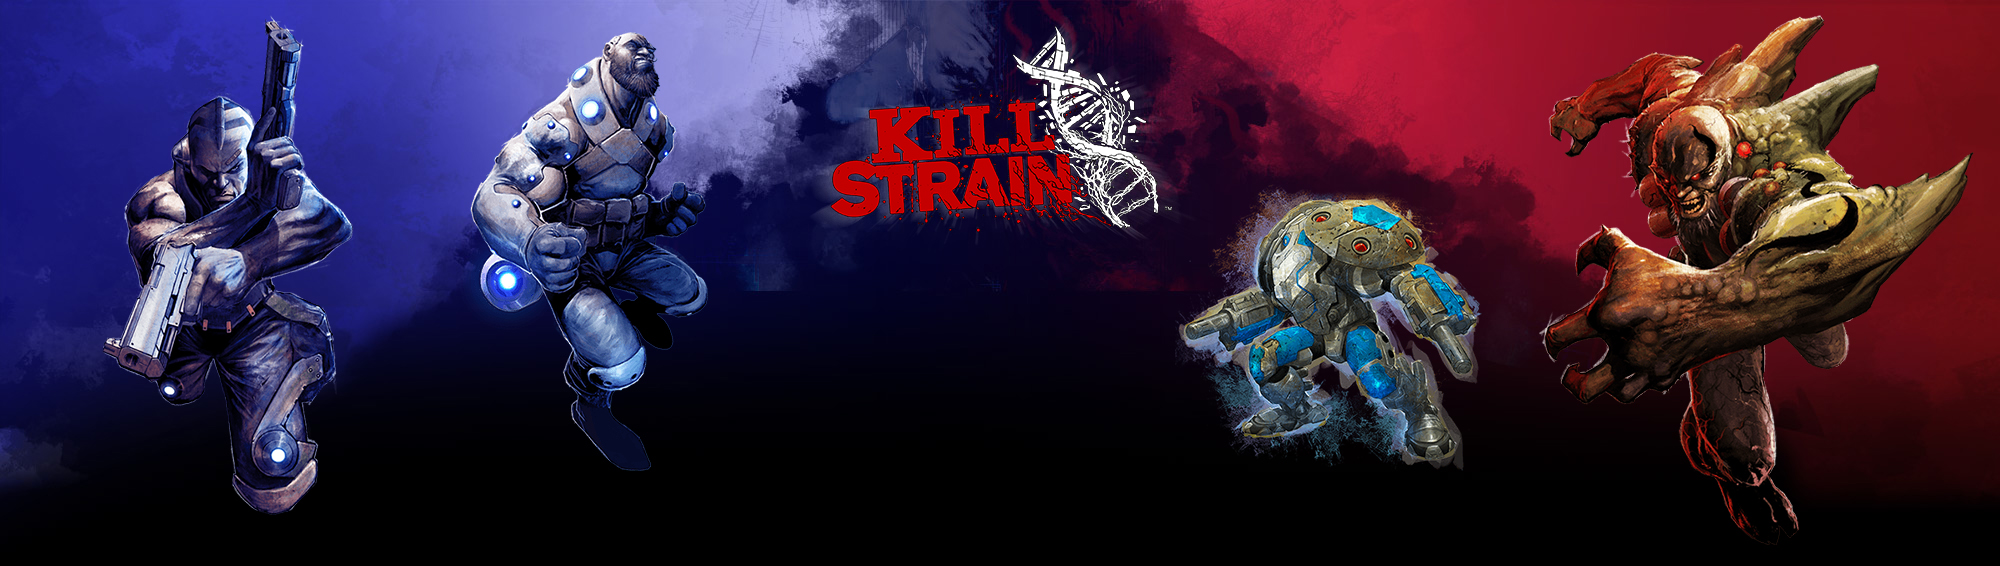 1417947499-kill-strain